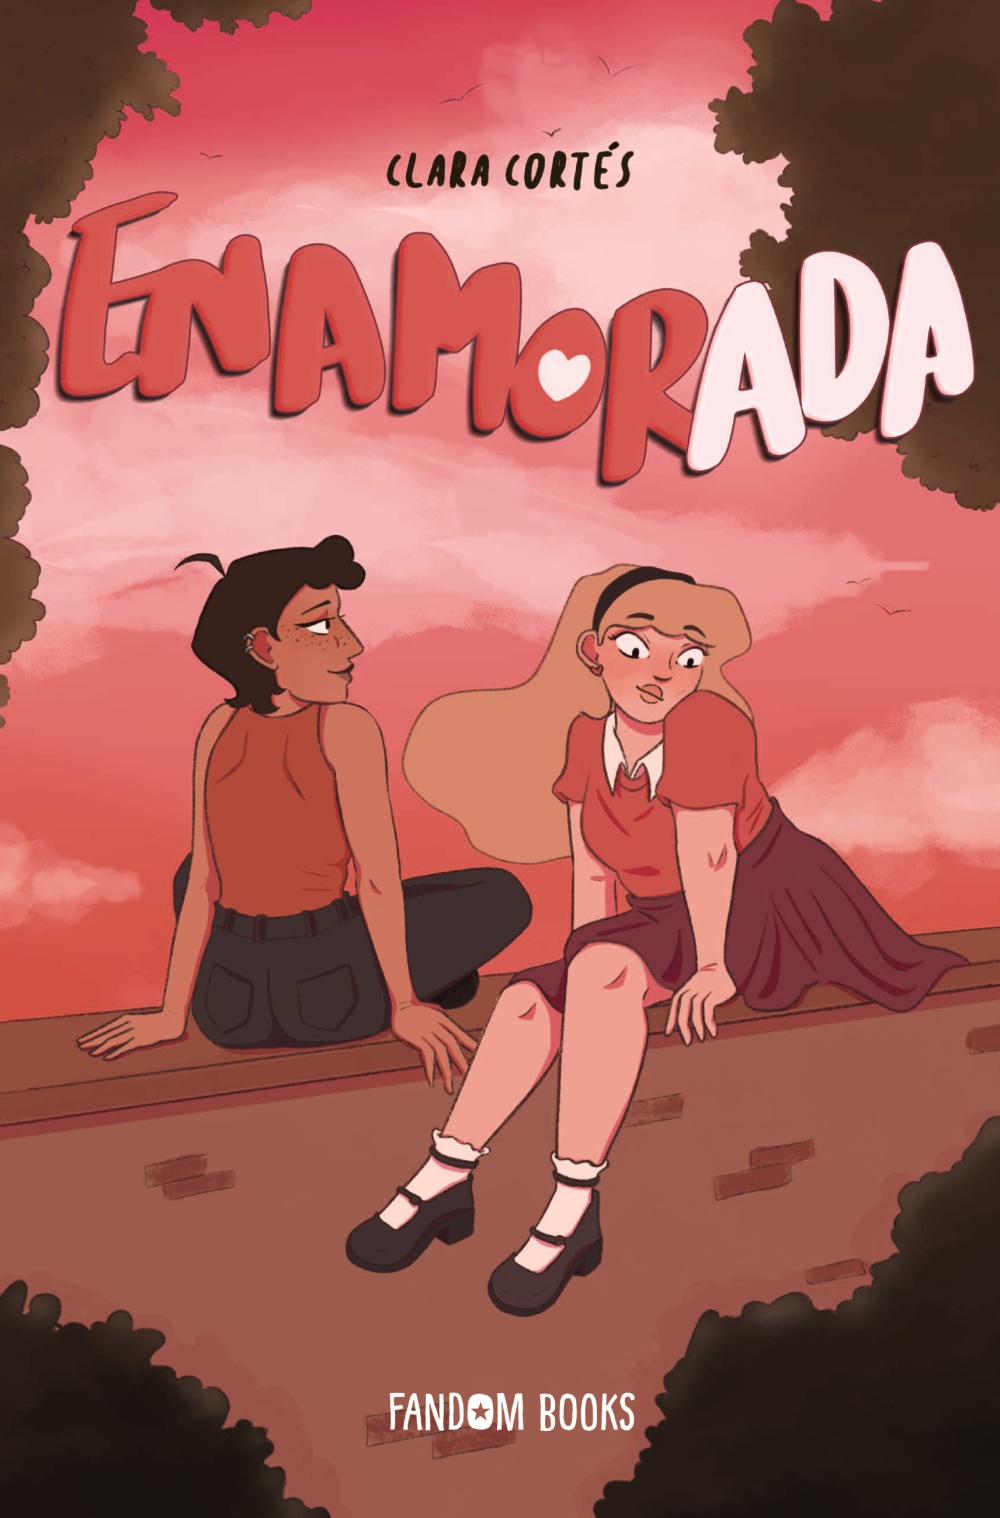 cubierta portada novela gráfica Clara Cortés Enarmorada